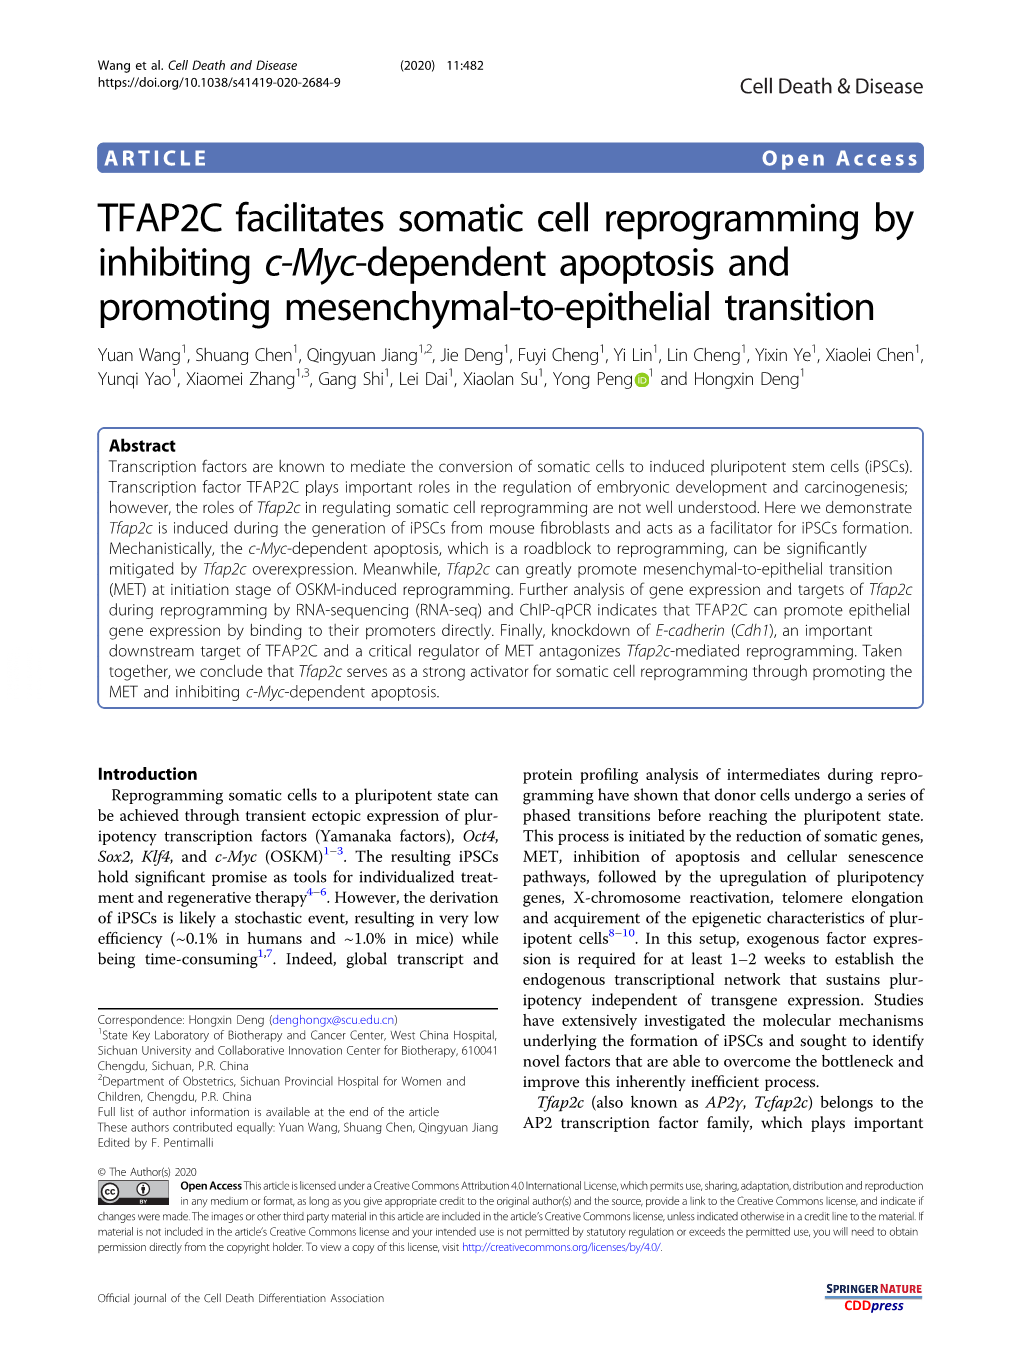 TFAP2C Facilitates Somatic Cell Reprogramming by Inhibiting C-Myc